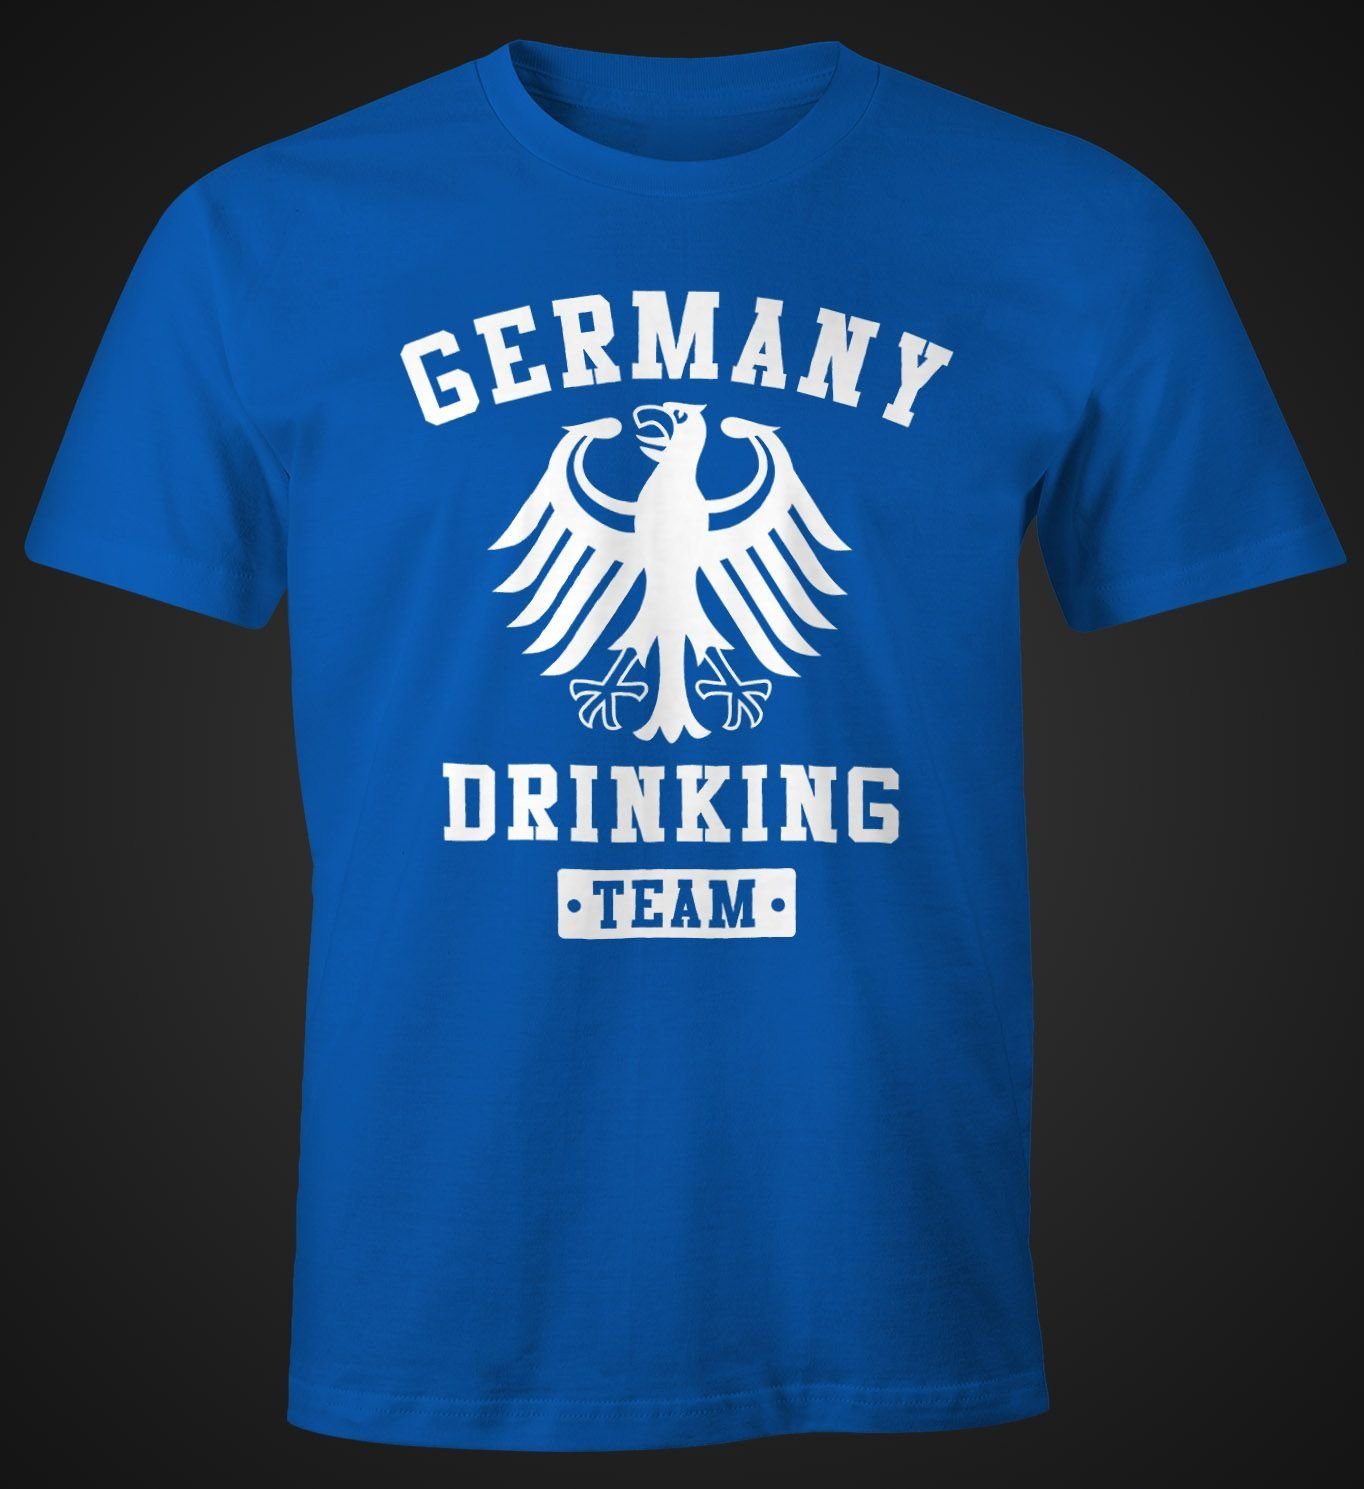 Adler mit T-Shirt Fun-Shirt Team Deutschland Herren MoonWorks Drinking Print-Shirt blau Moonworks® Bier Print Germany